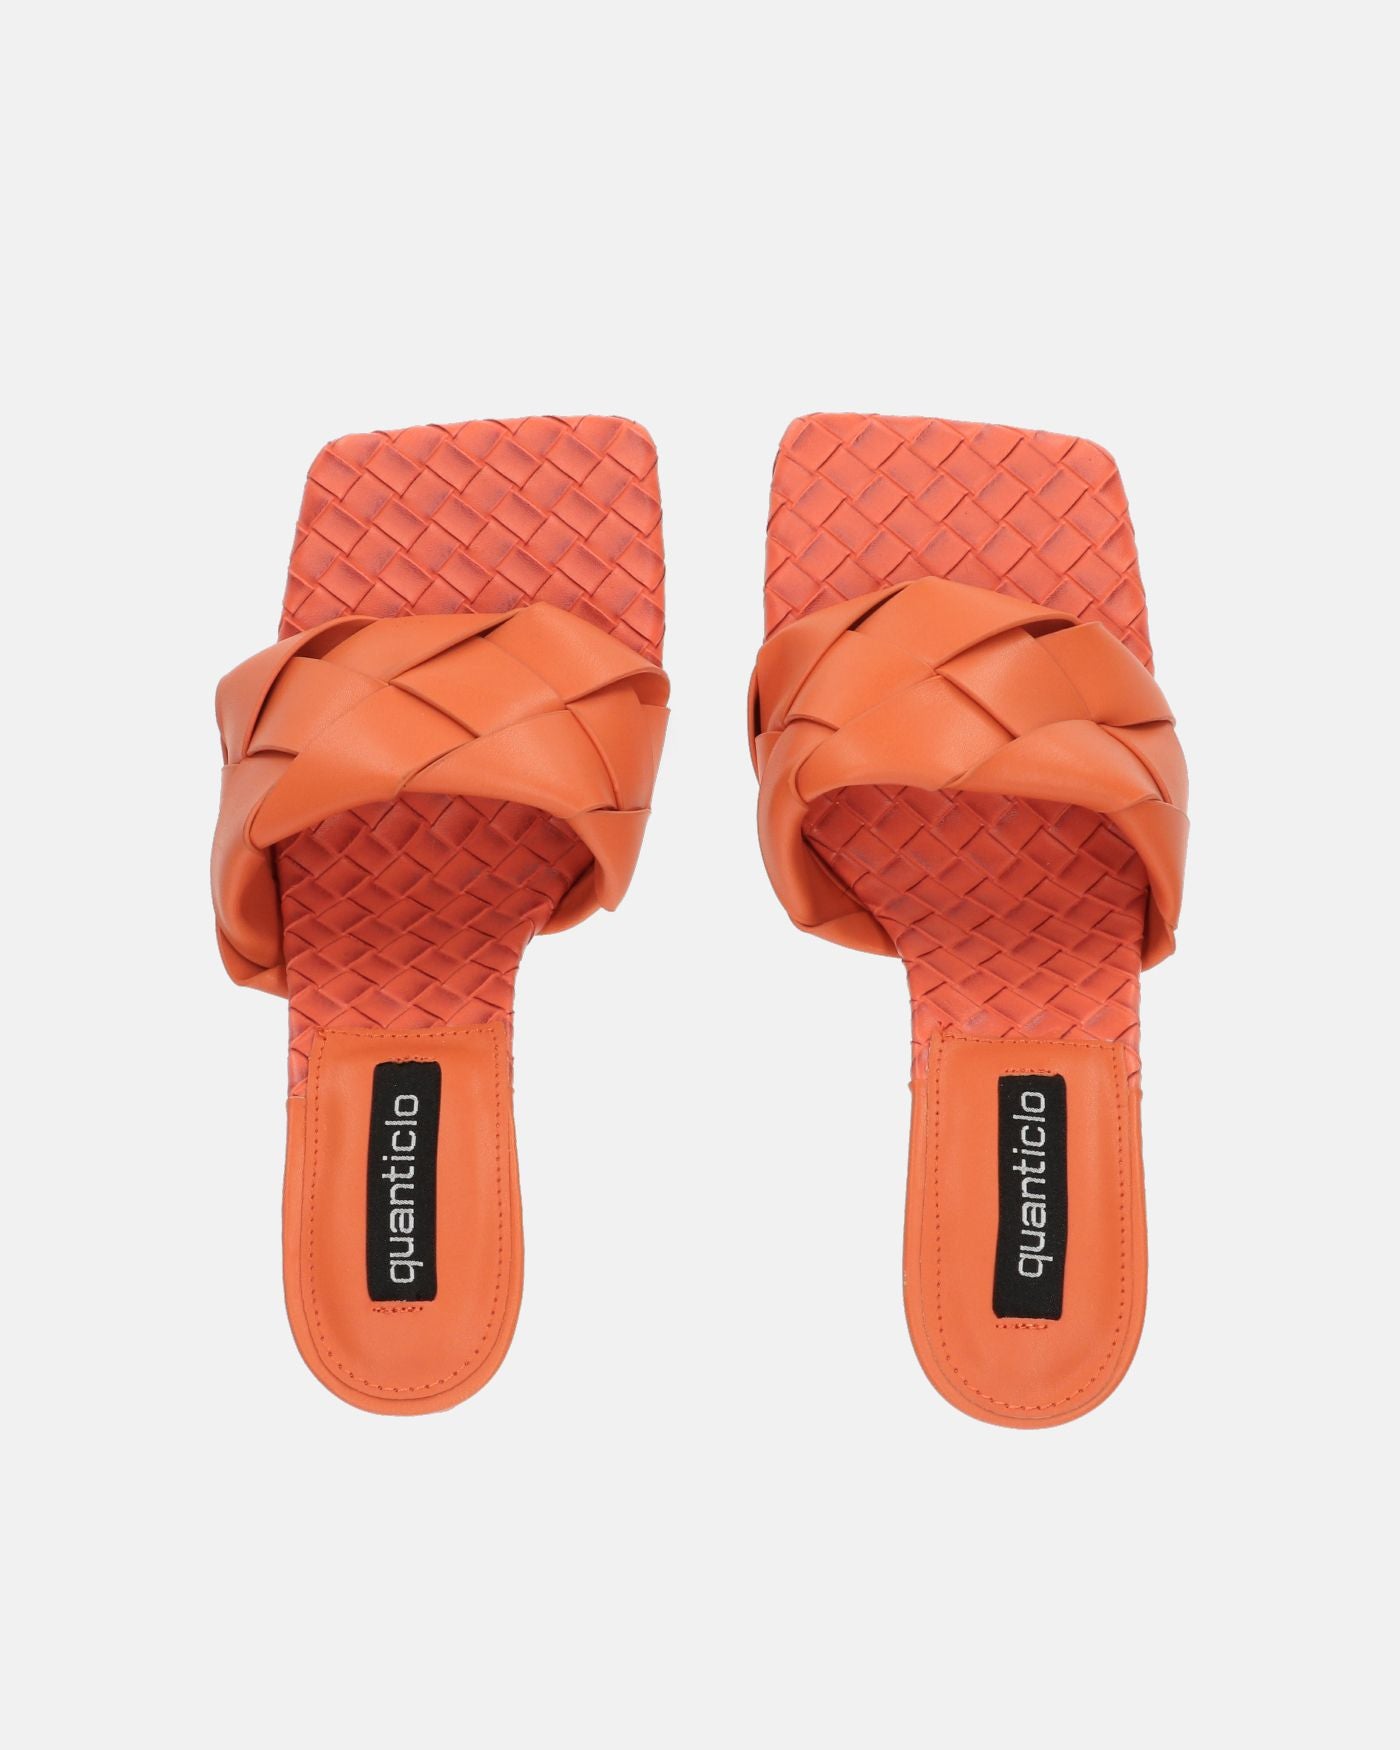 ENRICA - sandalo in pelle arancio intrecciata con tacco